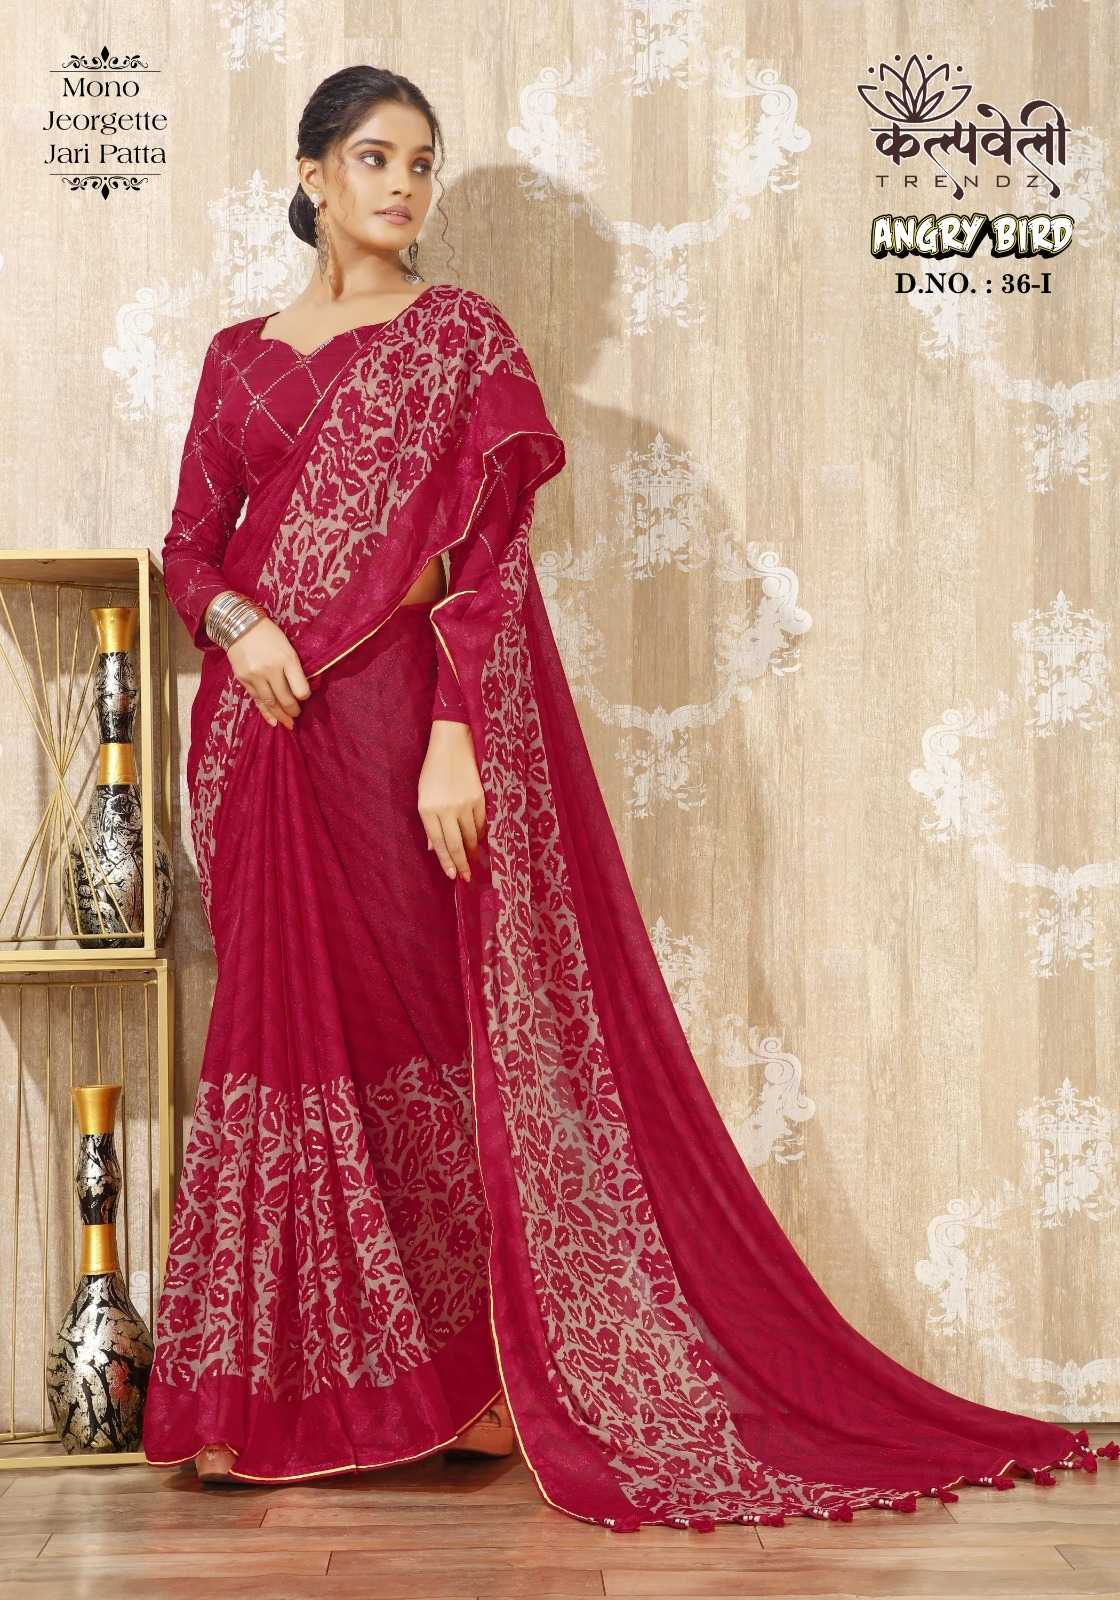 kalpavelly trendz angry bird 36 georgette fancy sarees wholesaler